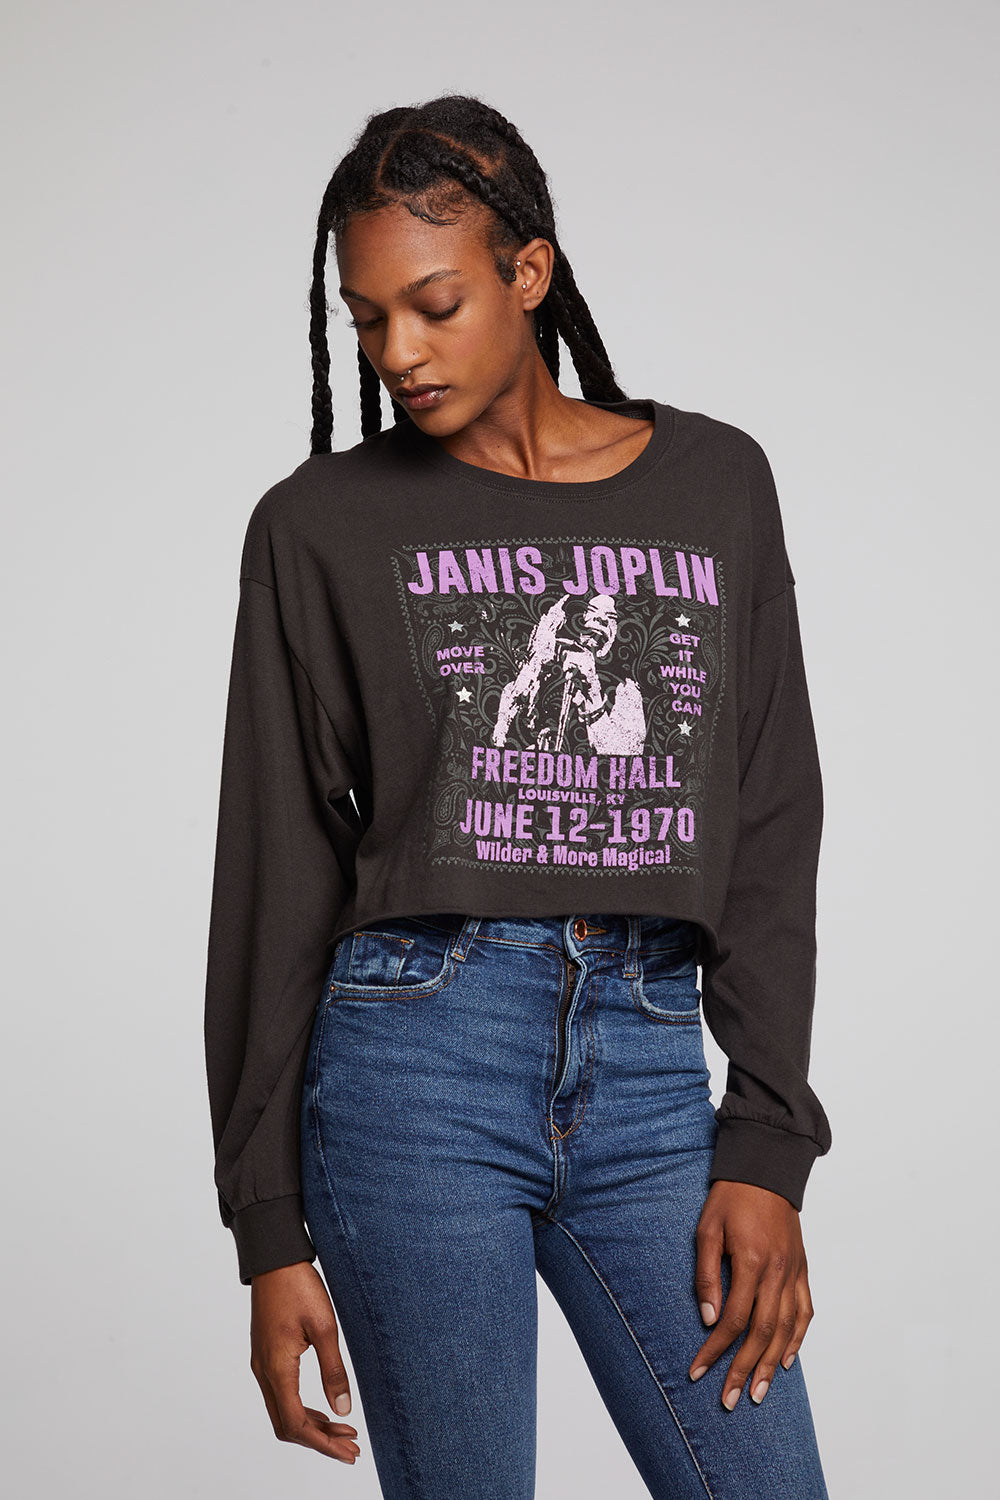 Janis Joplin Freedom Hall Long Sleeve WOMENS chaserbrand